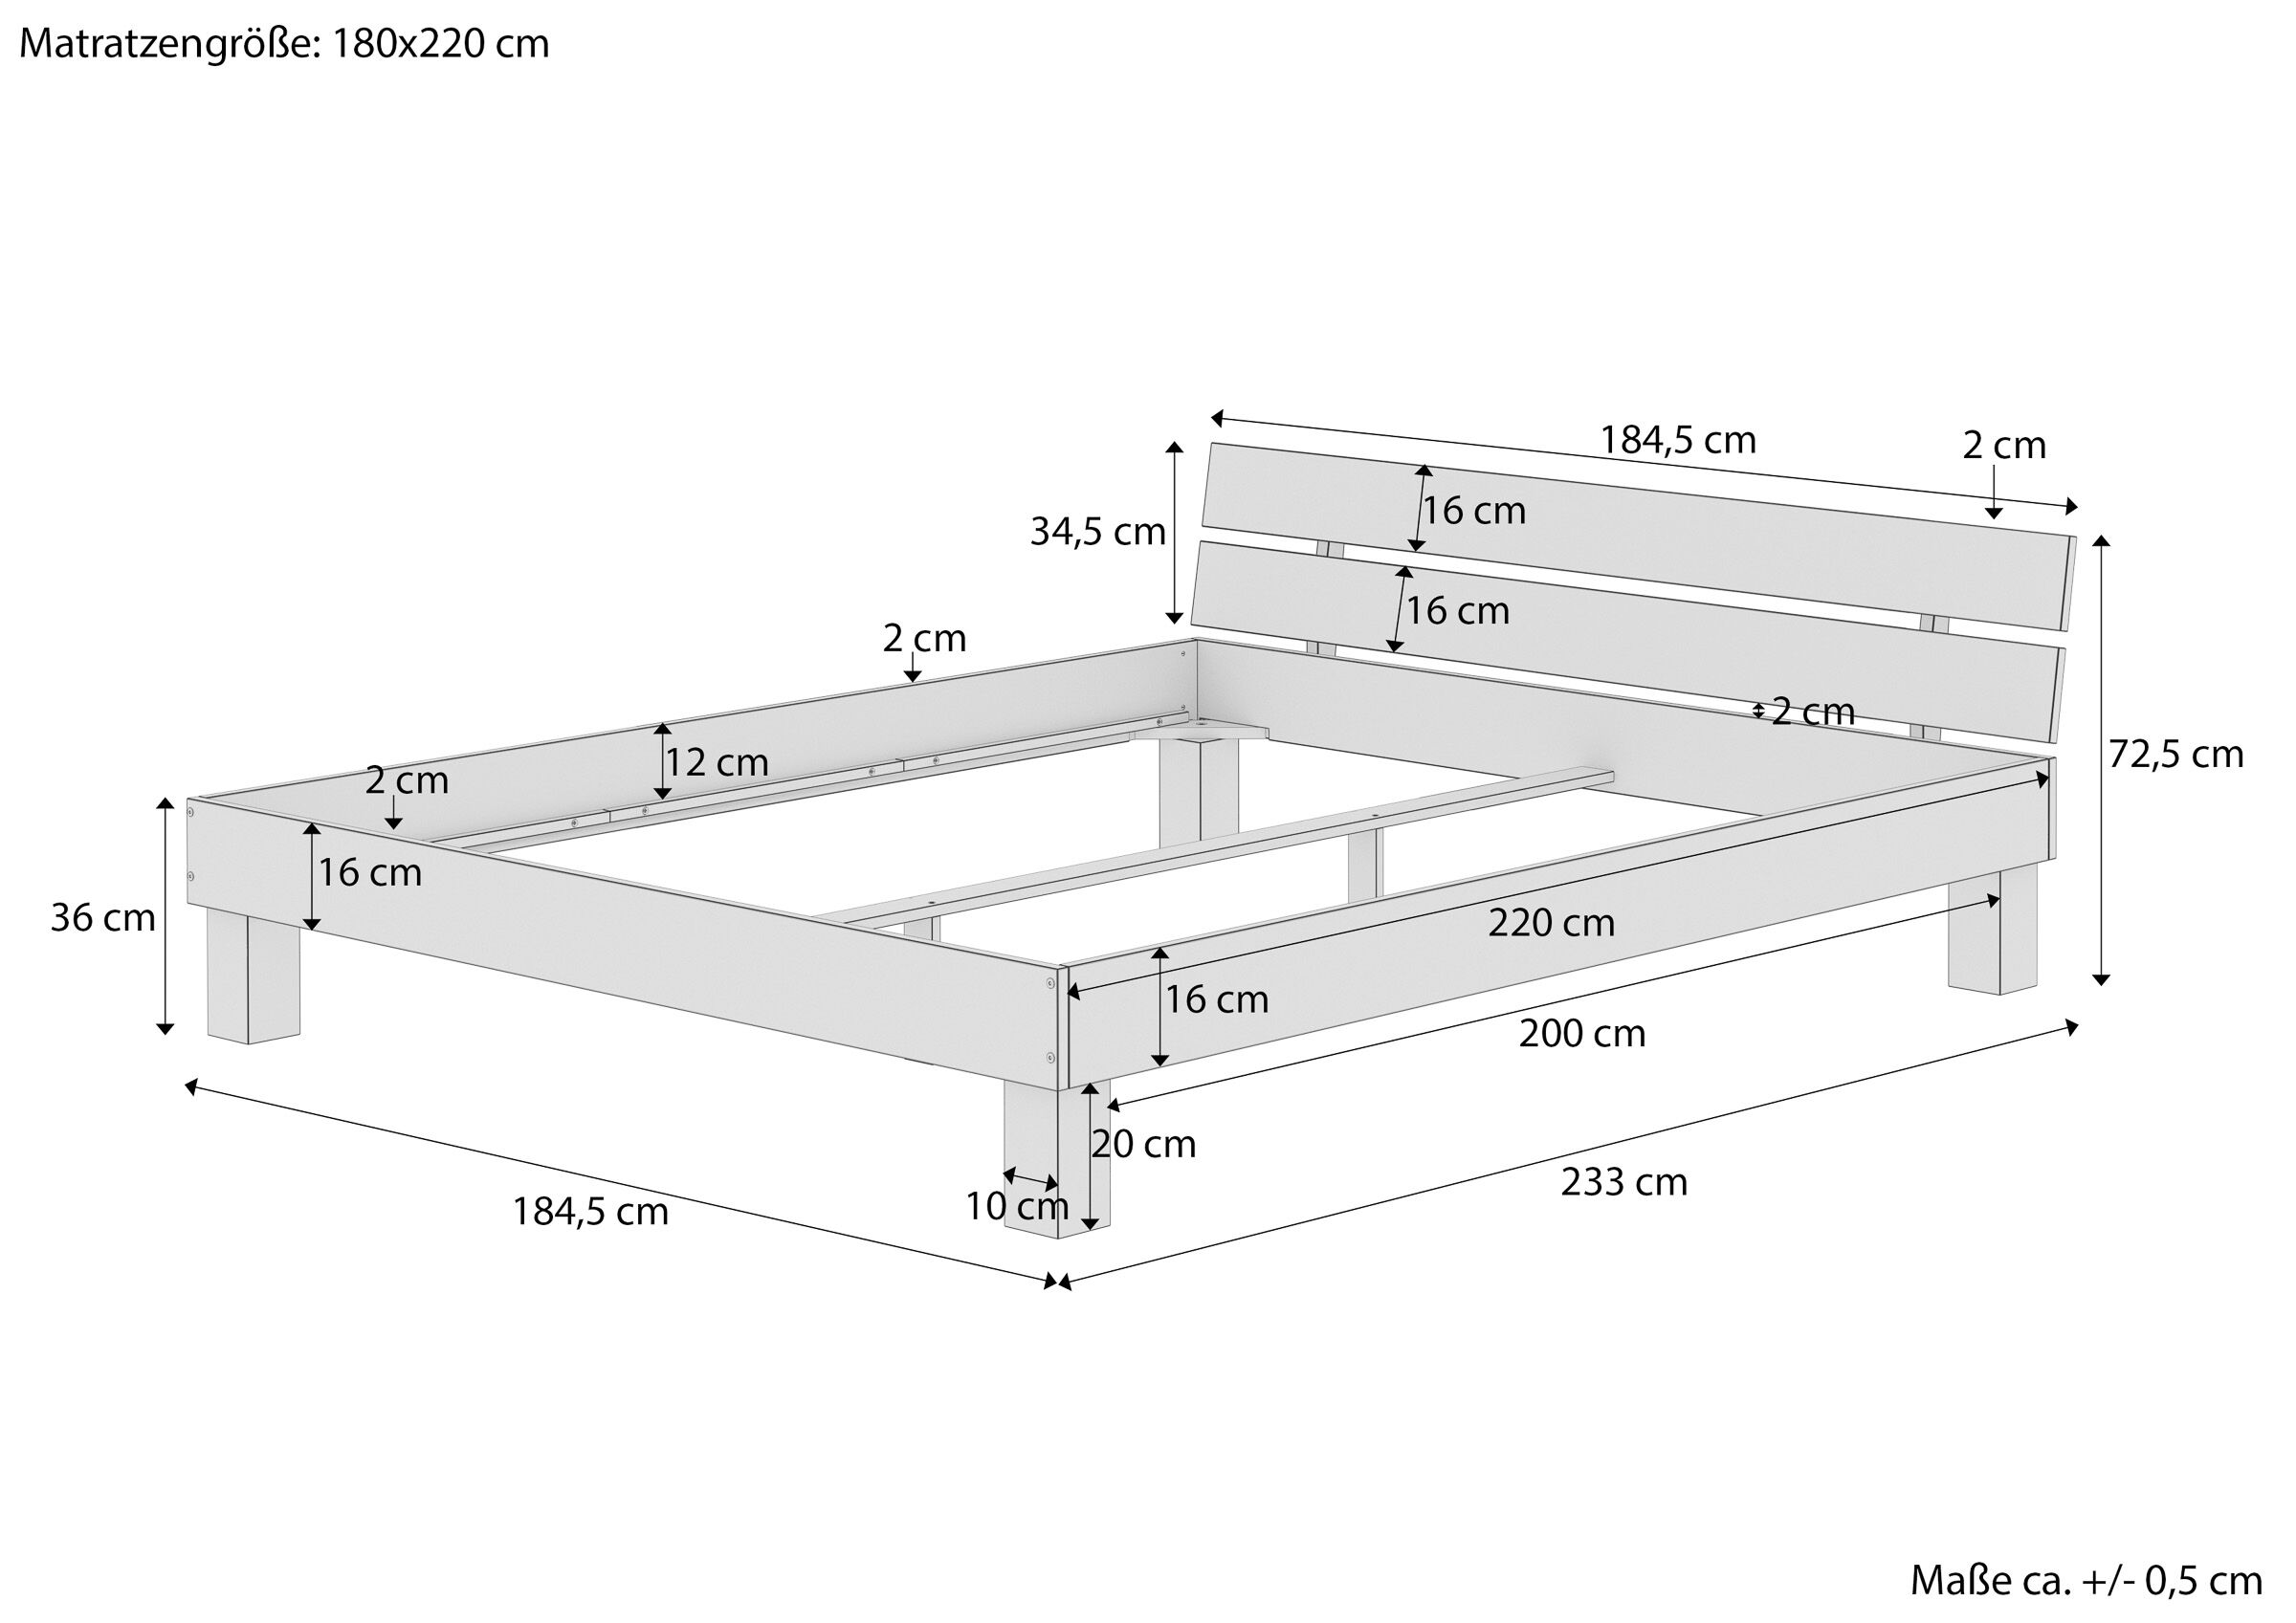 Maße des Futonbettes 180x220 aus Buchenholz